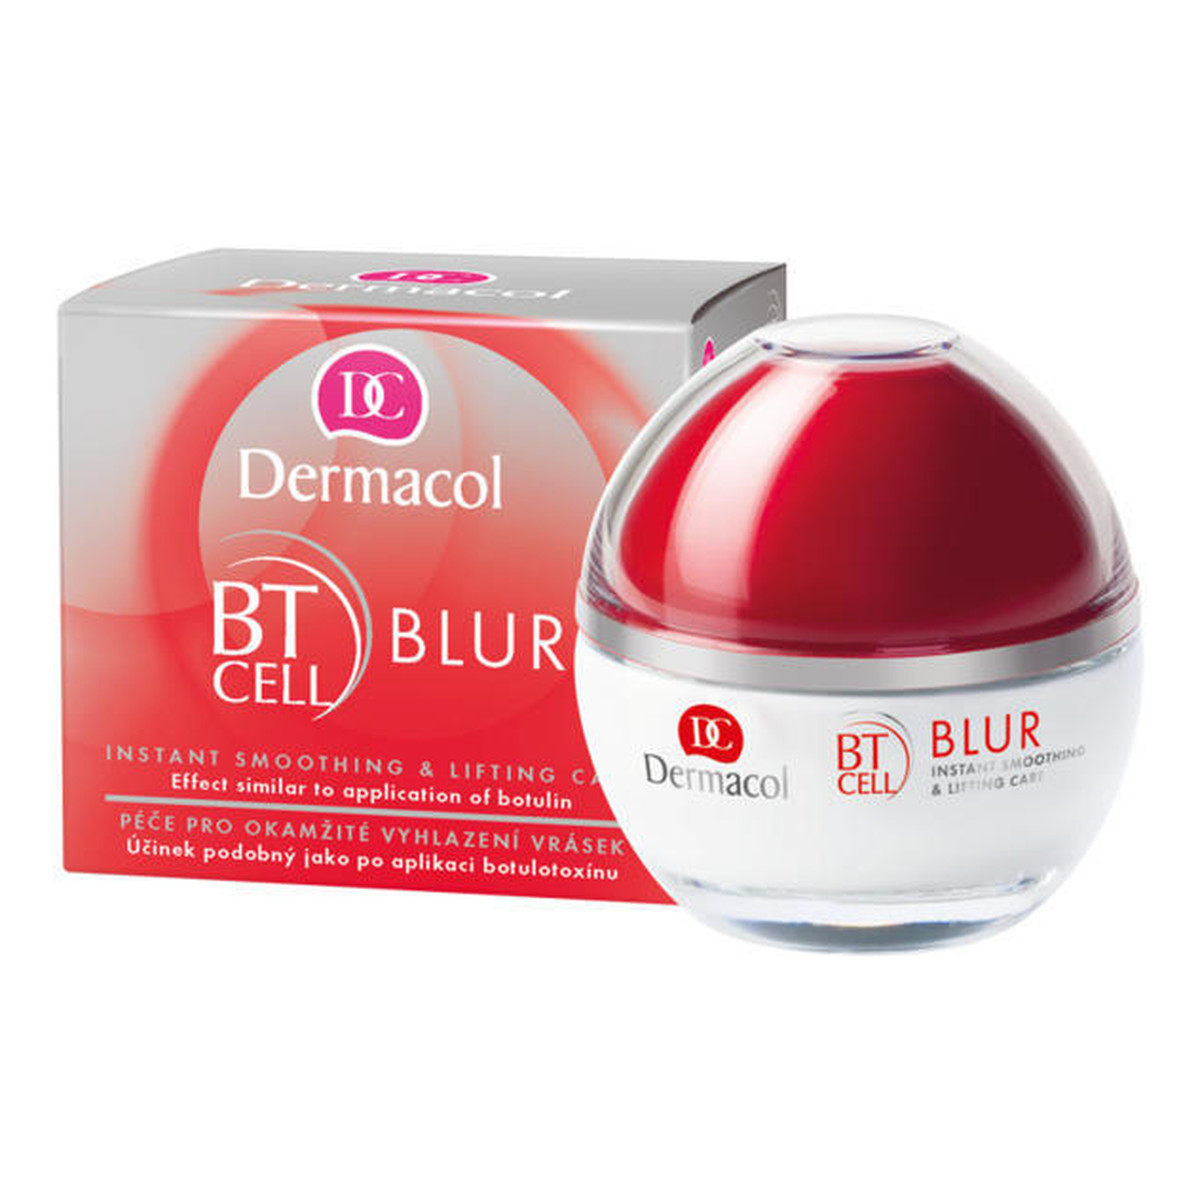 Dermacol BT Cell Blur krem do twarzy 50ml